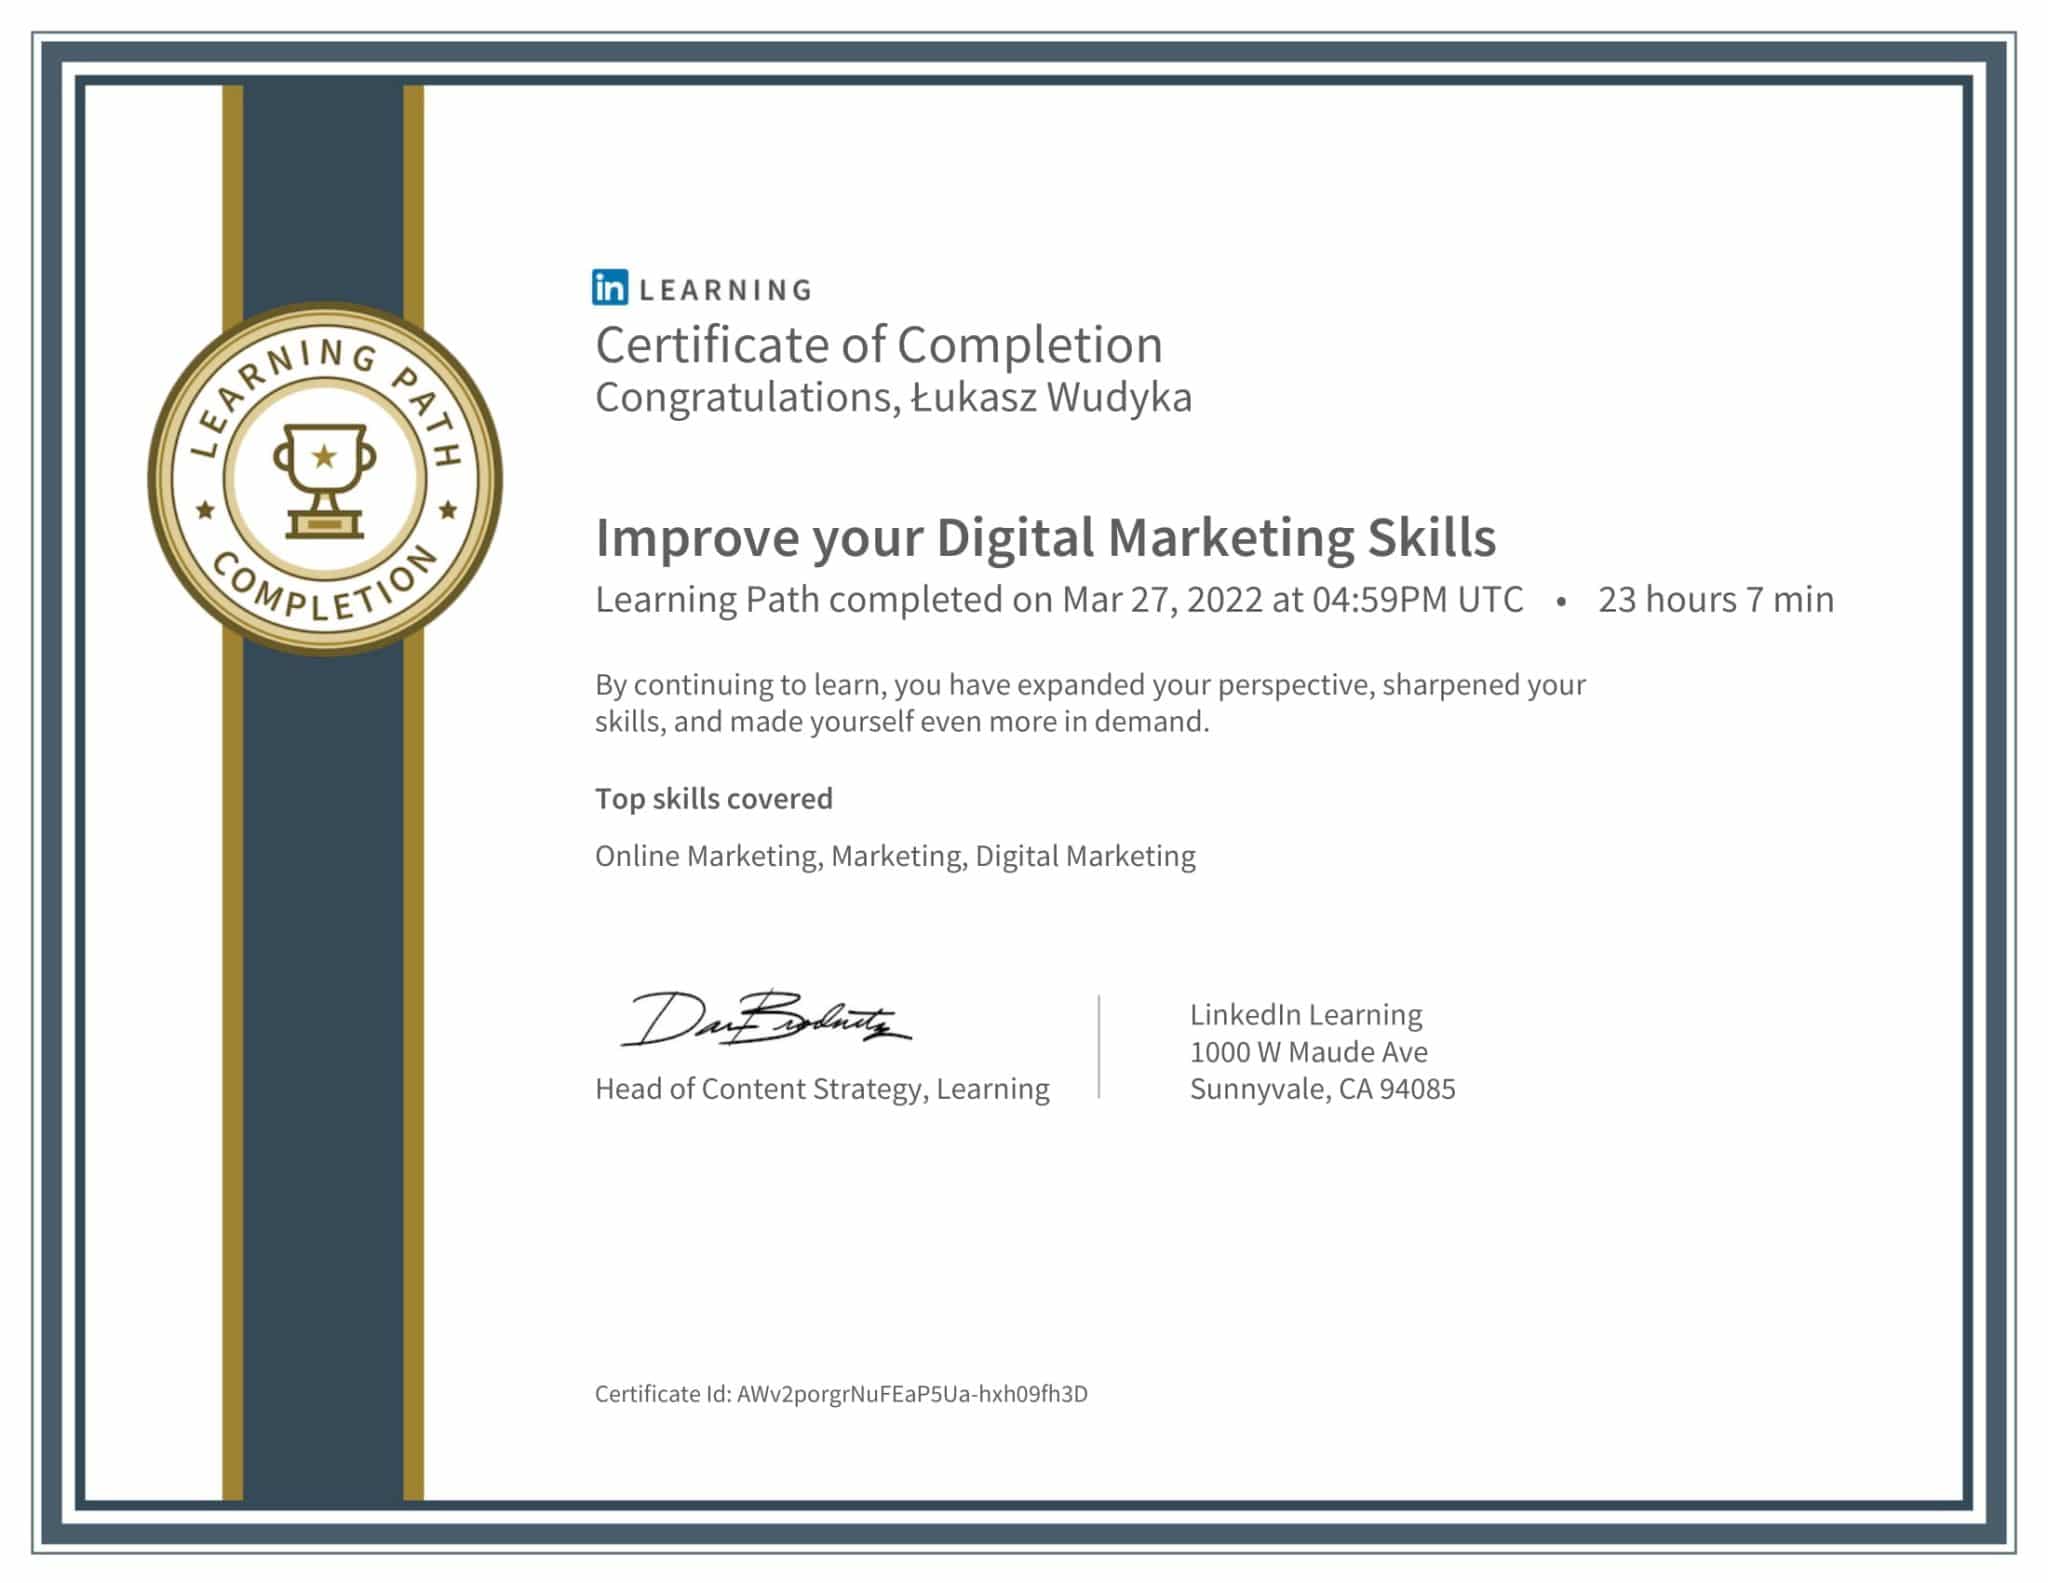 CertificateOfCompletion_Improve your Digital Marketing Skills-1